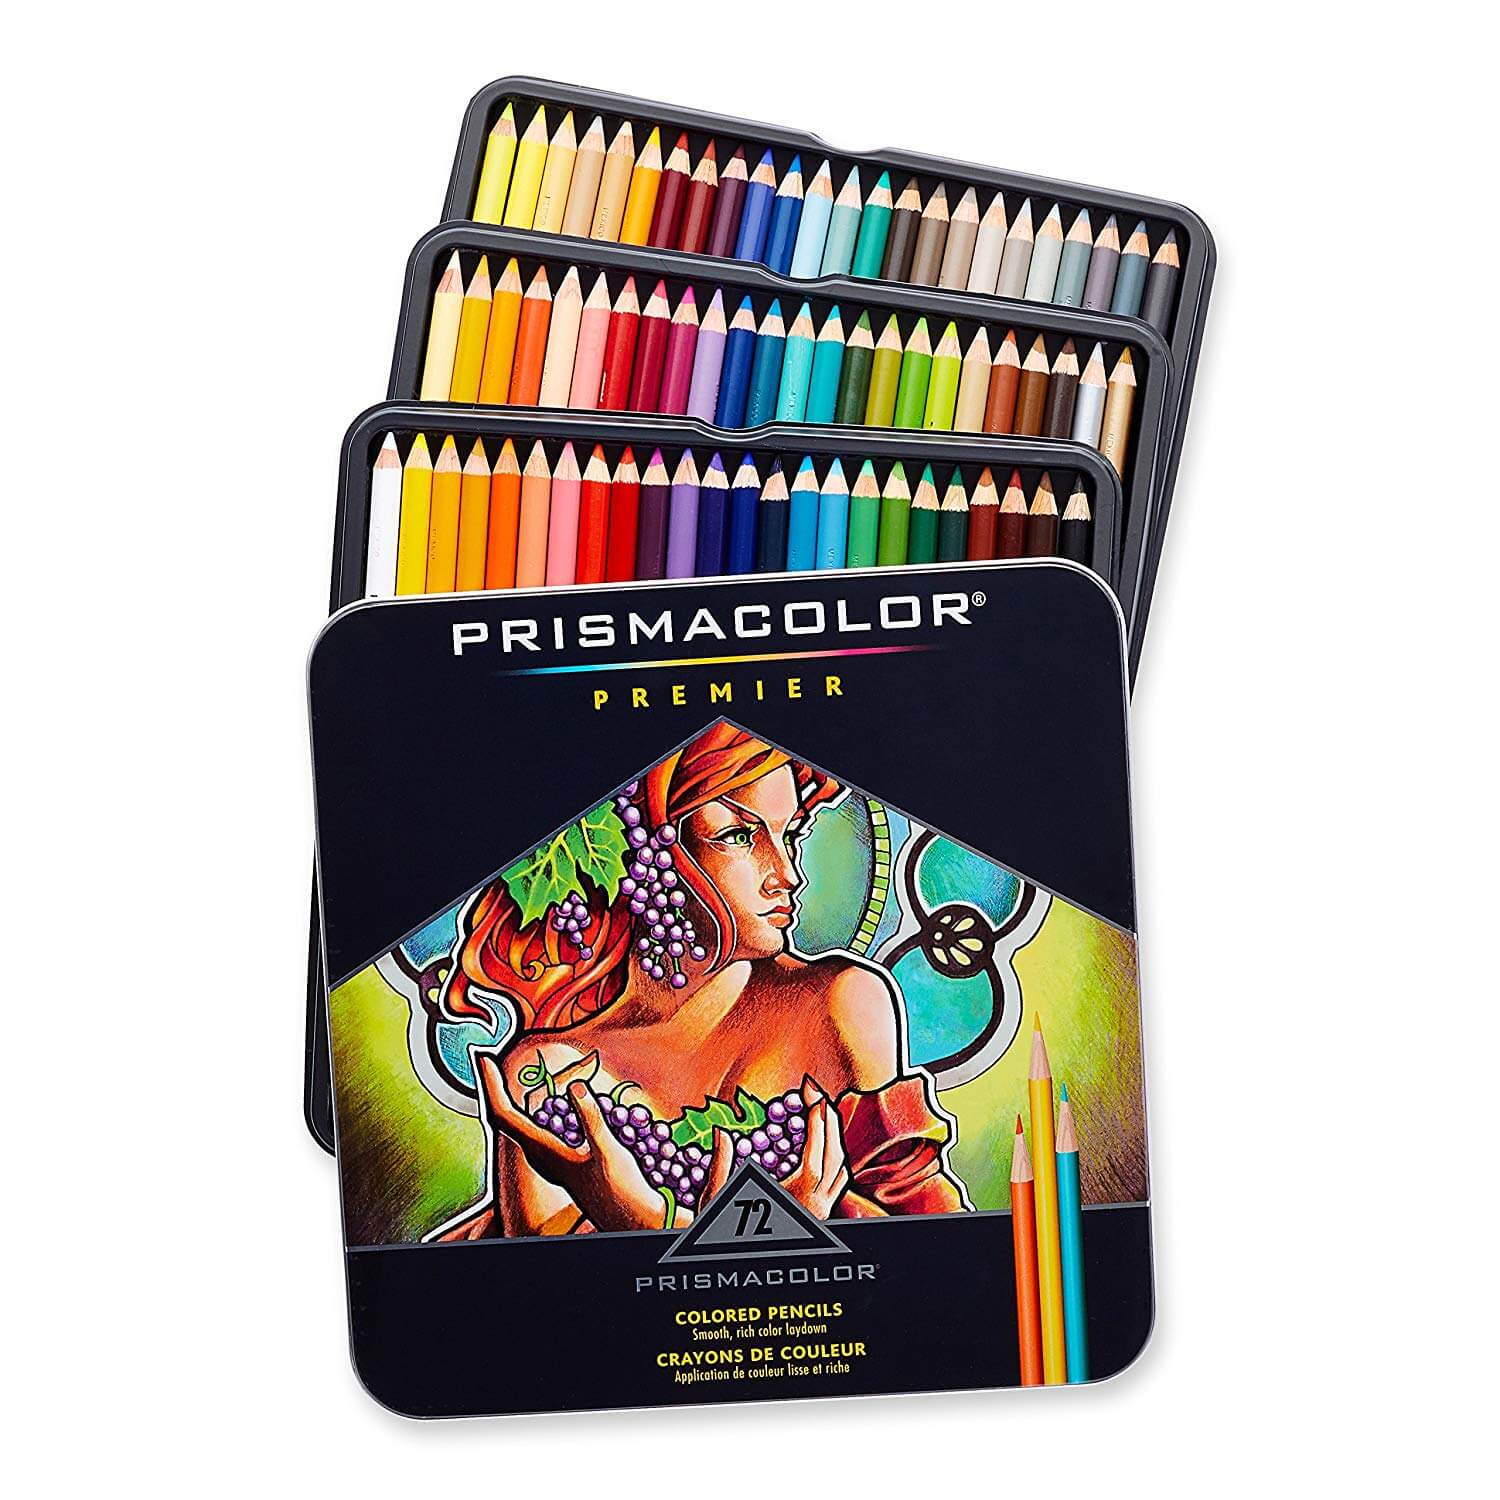 Prismacolor Premier Colored Pencils - - Best Supplies For Adult Coloring Blog